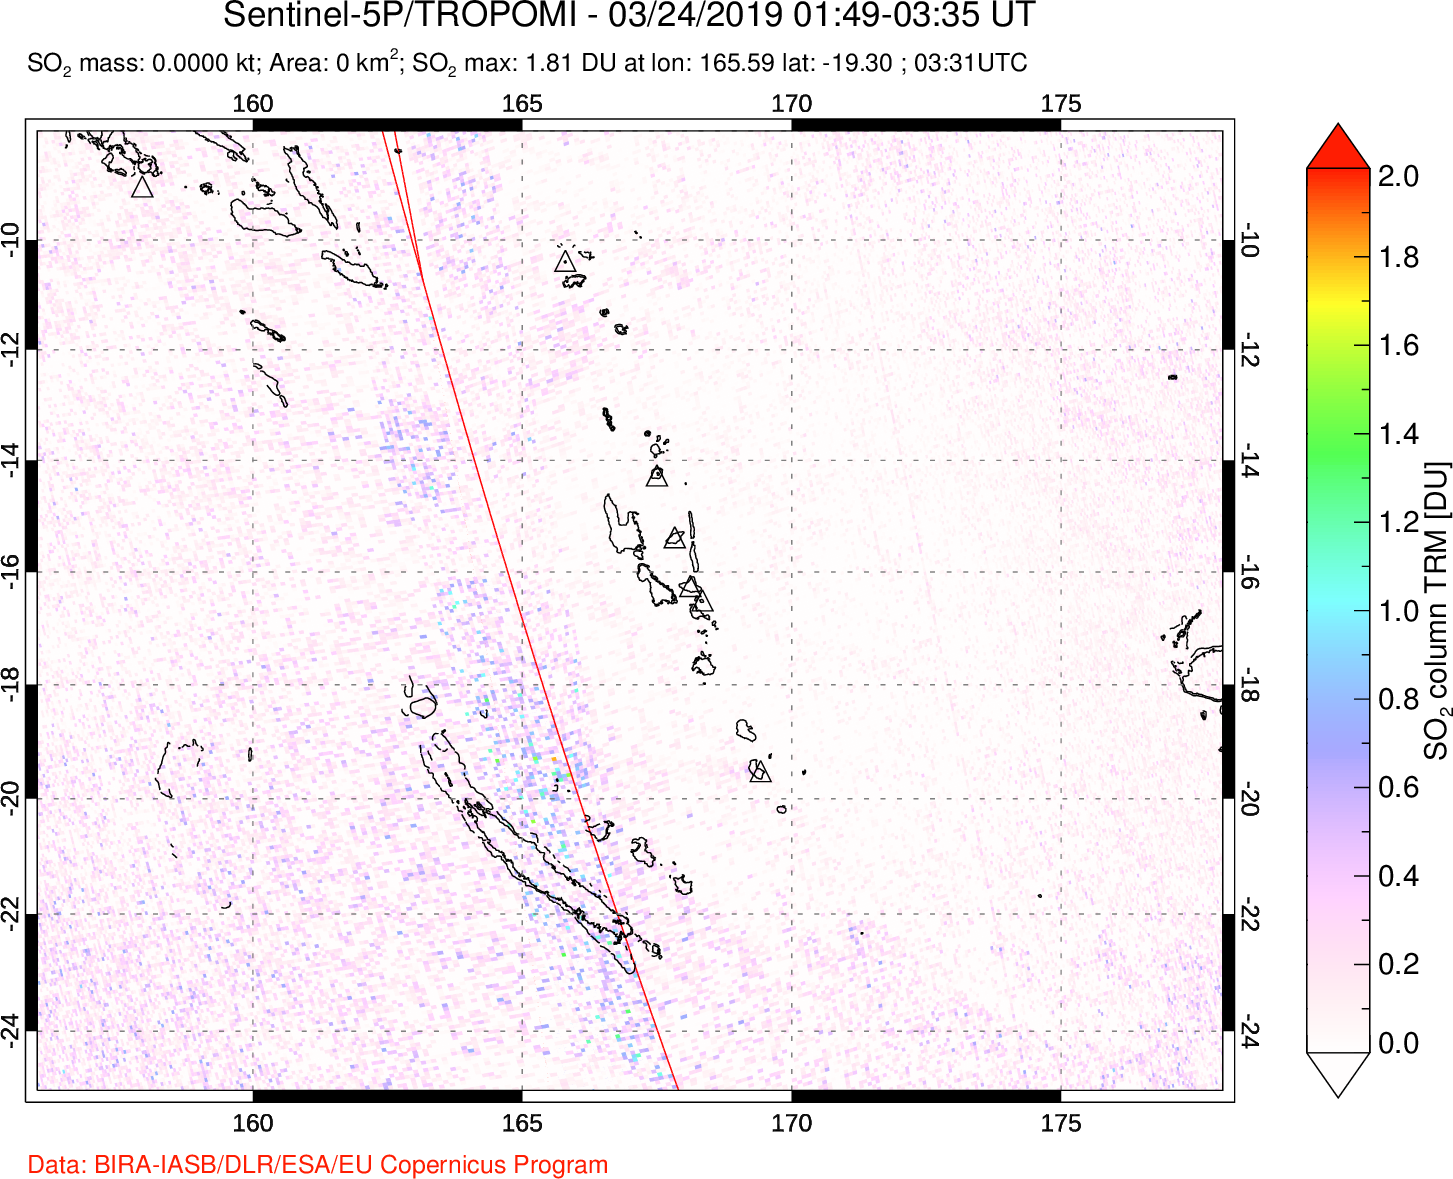 A sulfur dioxide image over Vanuatu, South Pacific on Mar 24, 2019.